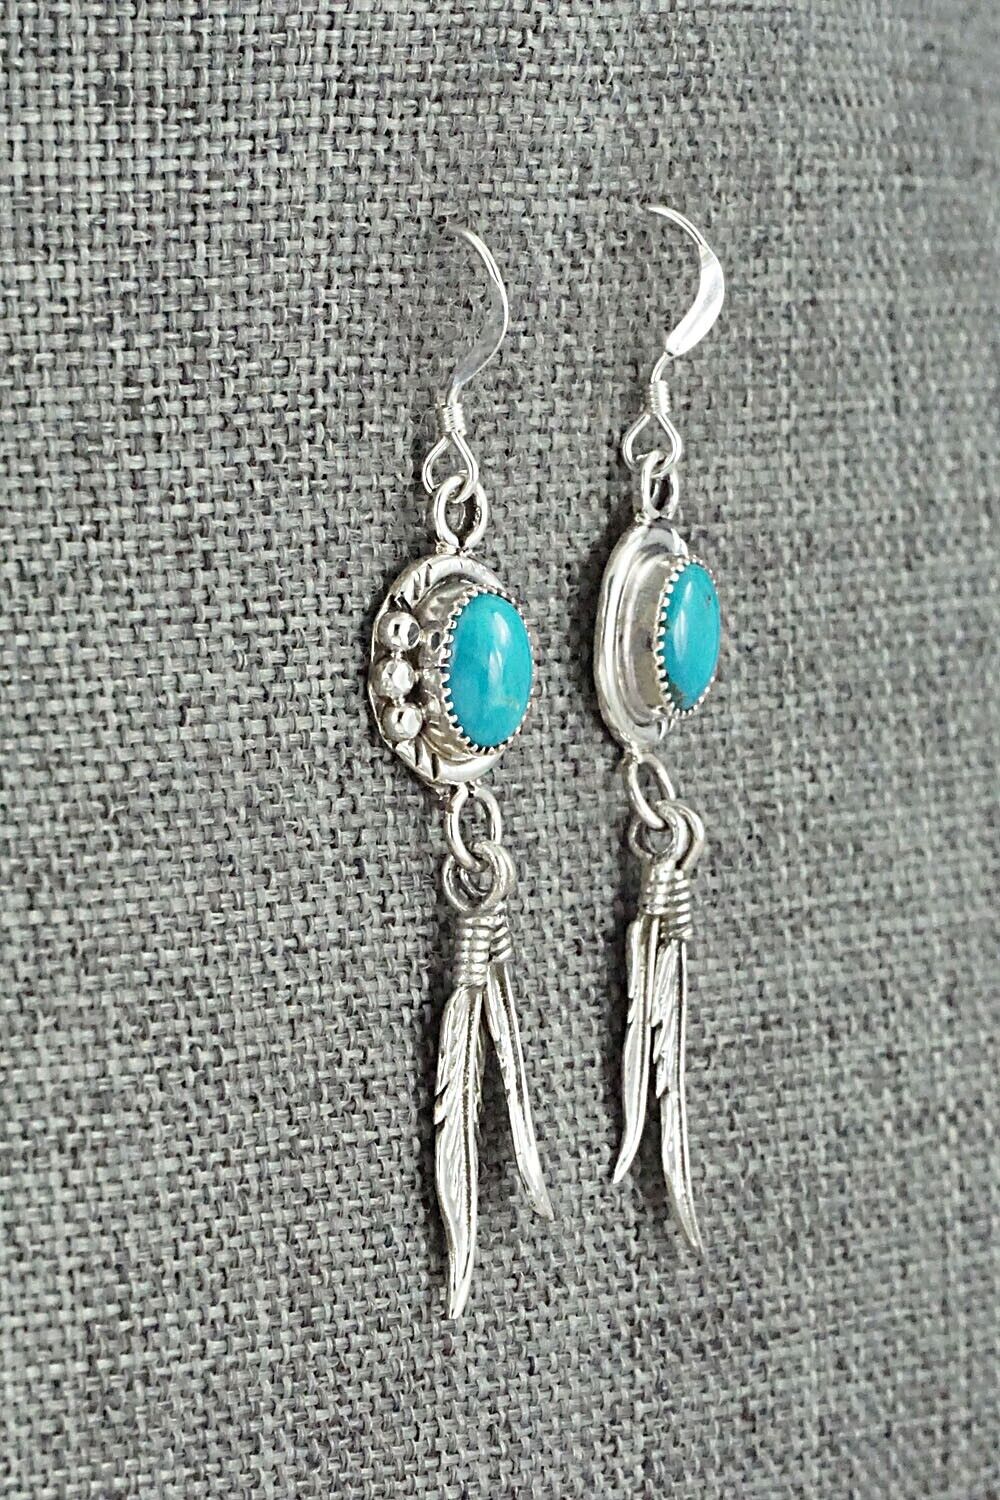 Turquoise & Sterling Silver Earrings - Rita Largo